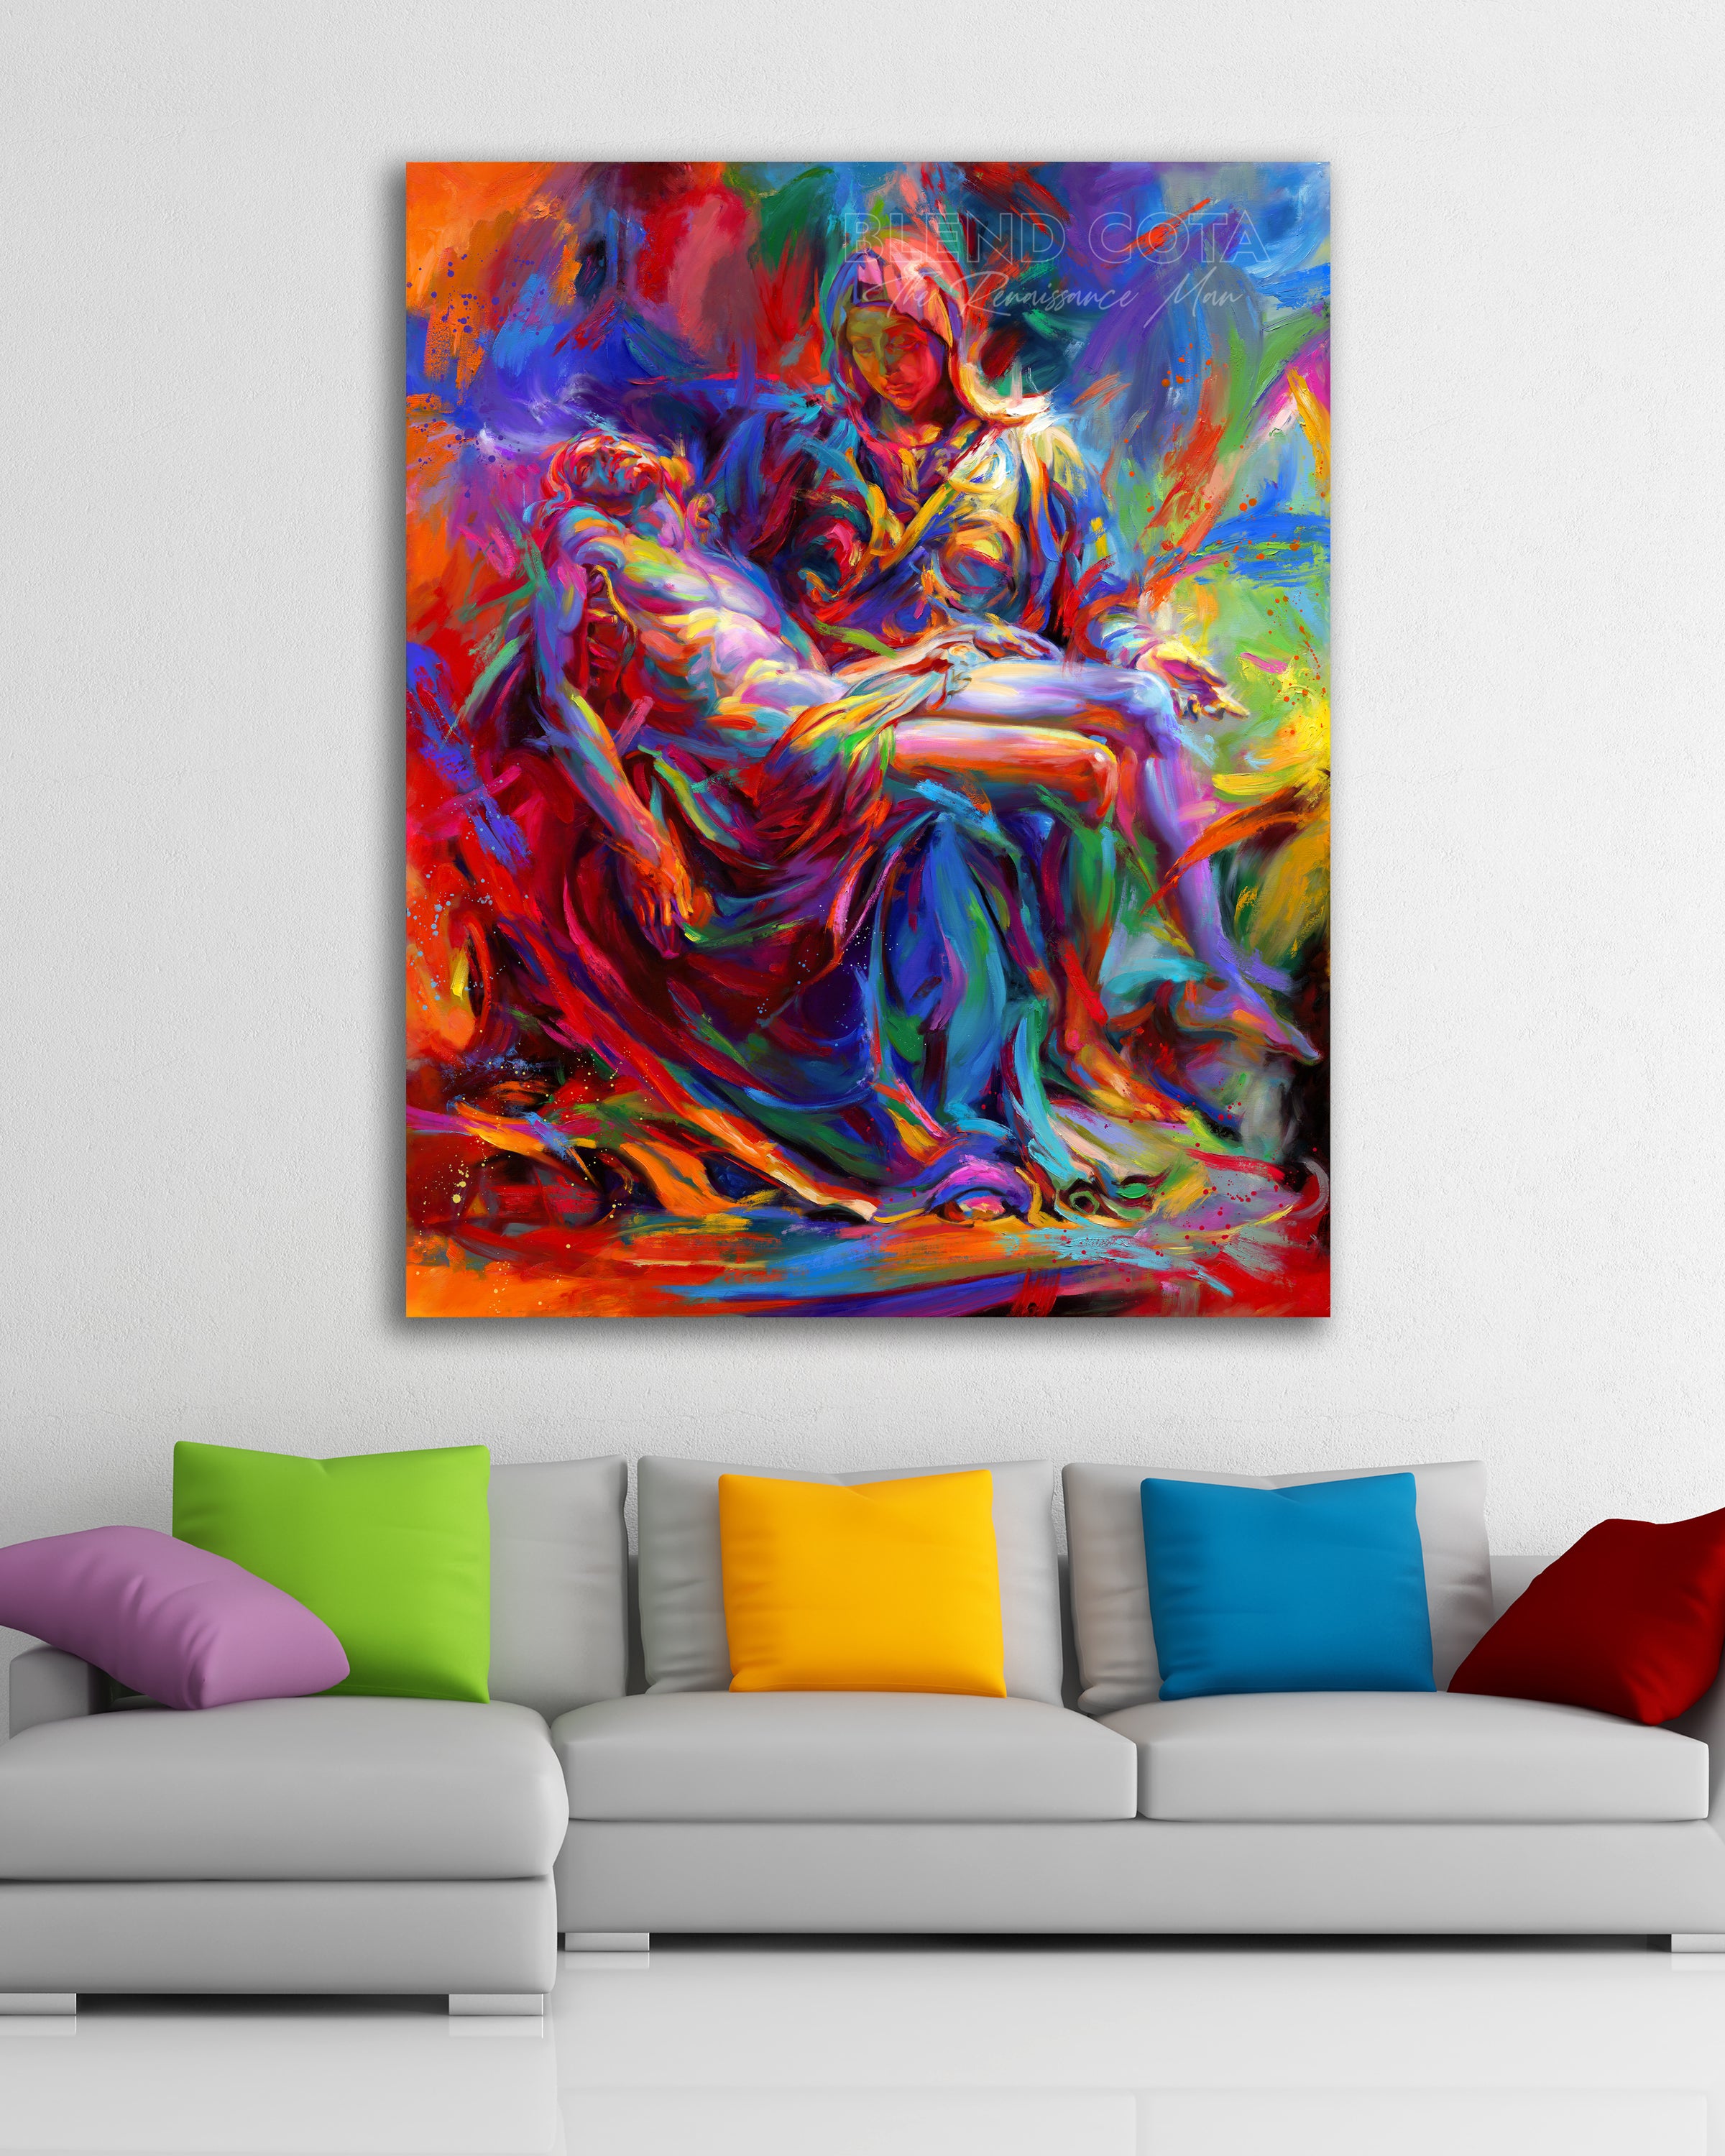 The Colors of Pieta - Blend Cota Original Oil Painting Framed - Blend Cota Studios 